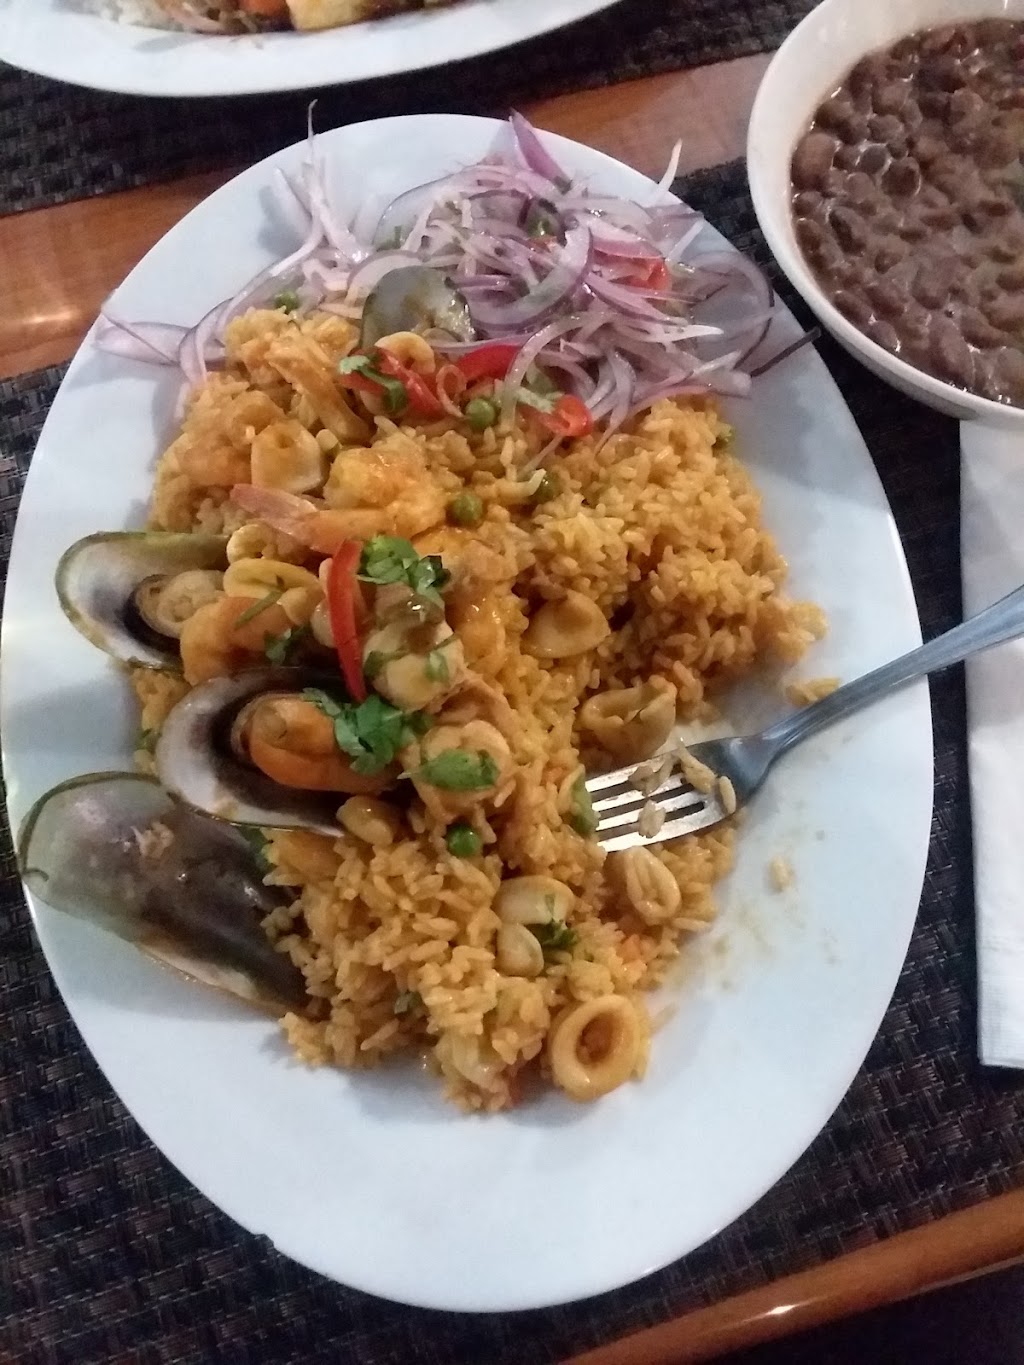 La Vicharra peruvian food | 58 Landing Rd, Glen Cove, NY 11542 | Phone: (516) 801-1314